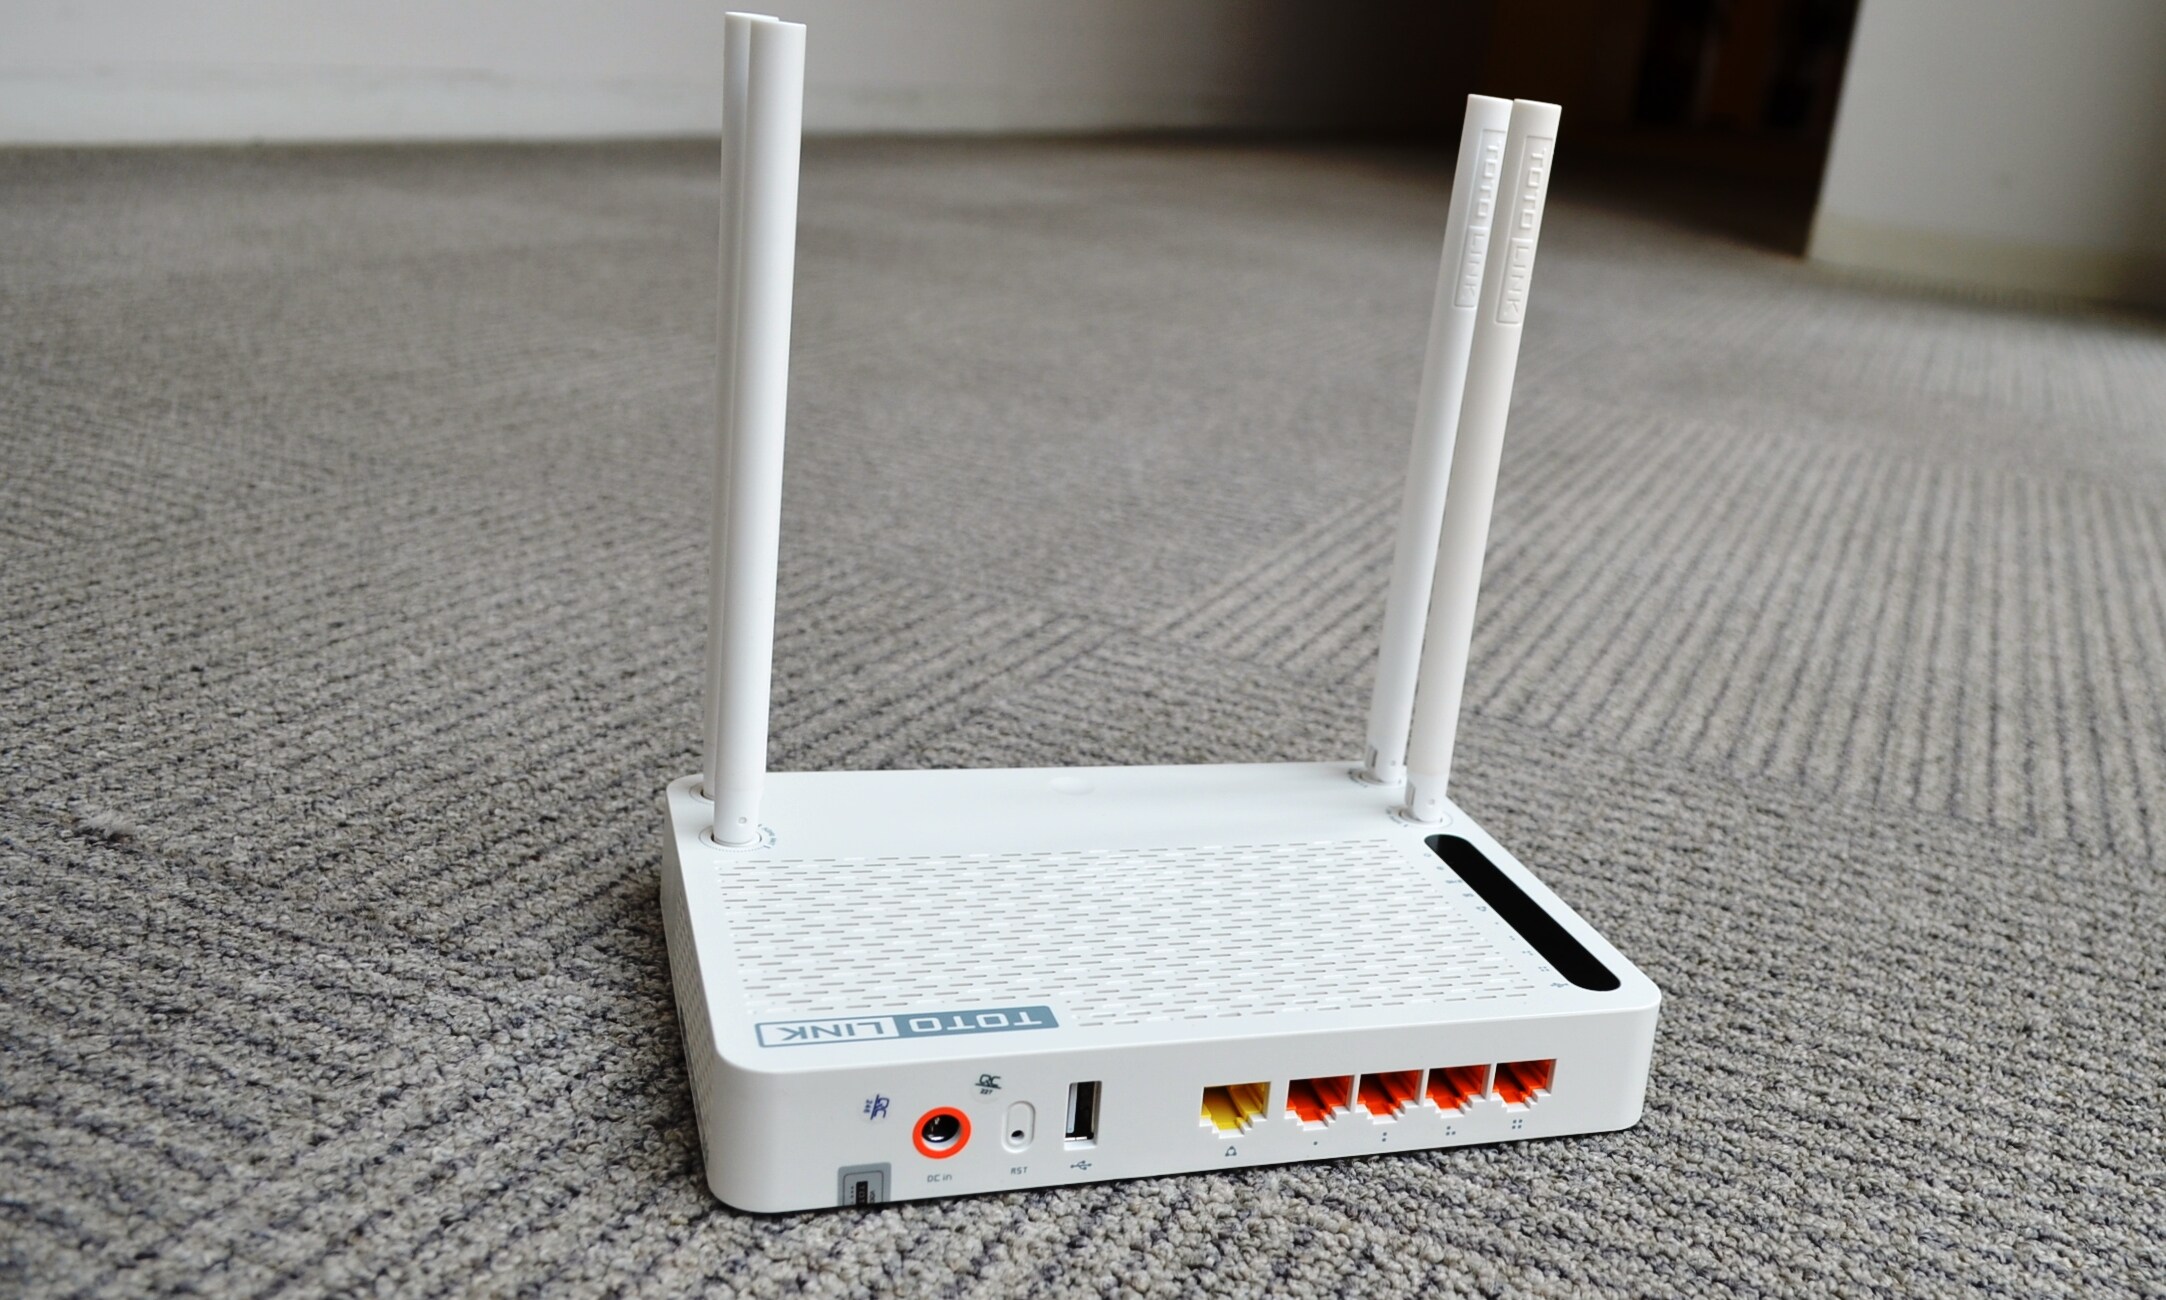 ToToLink A2004NS Wireless Router ไวร์เลสเราเตอร์